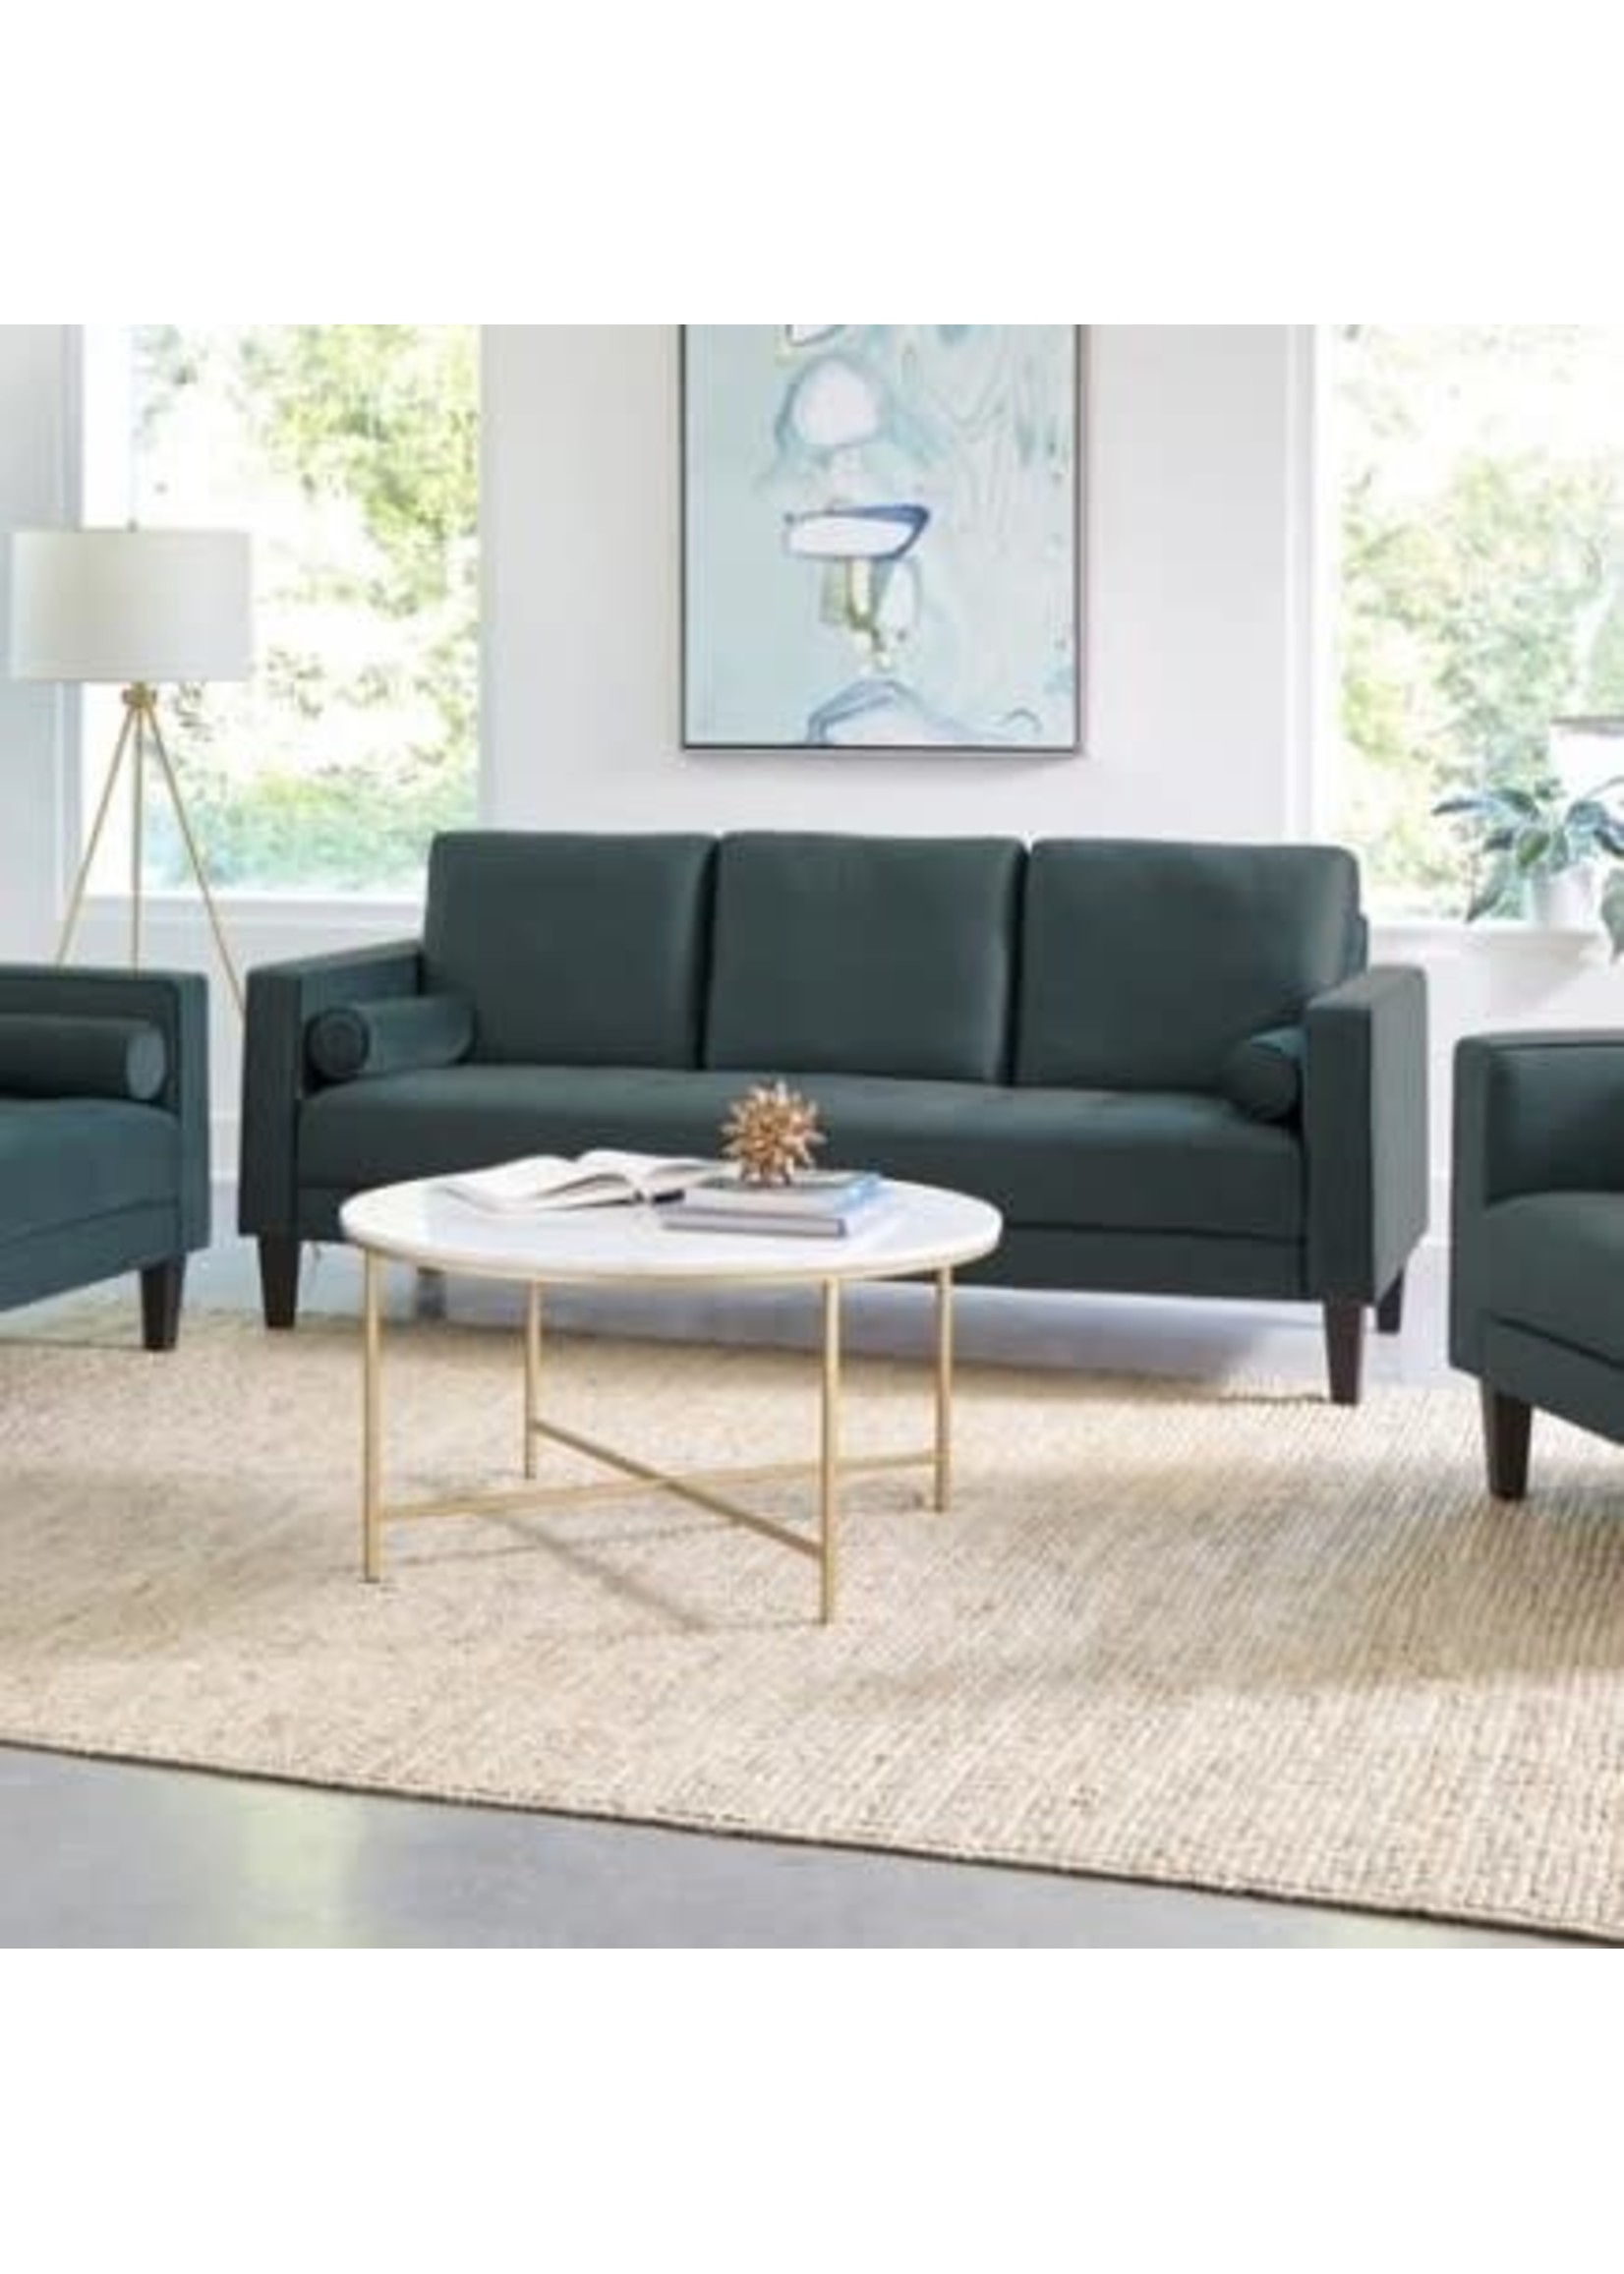 Coaster Furniture 509071 Gulfdale Cushion Back Upholstered Sofa Dark Teal 82x35x35